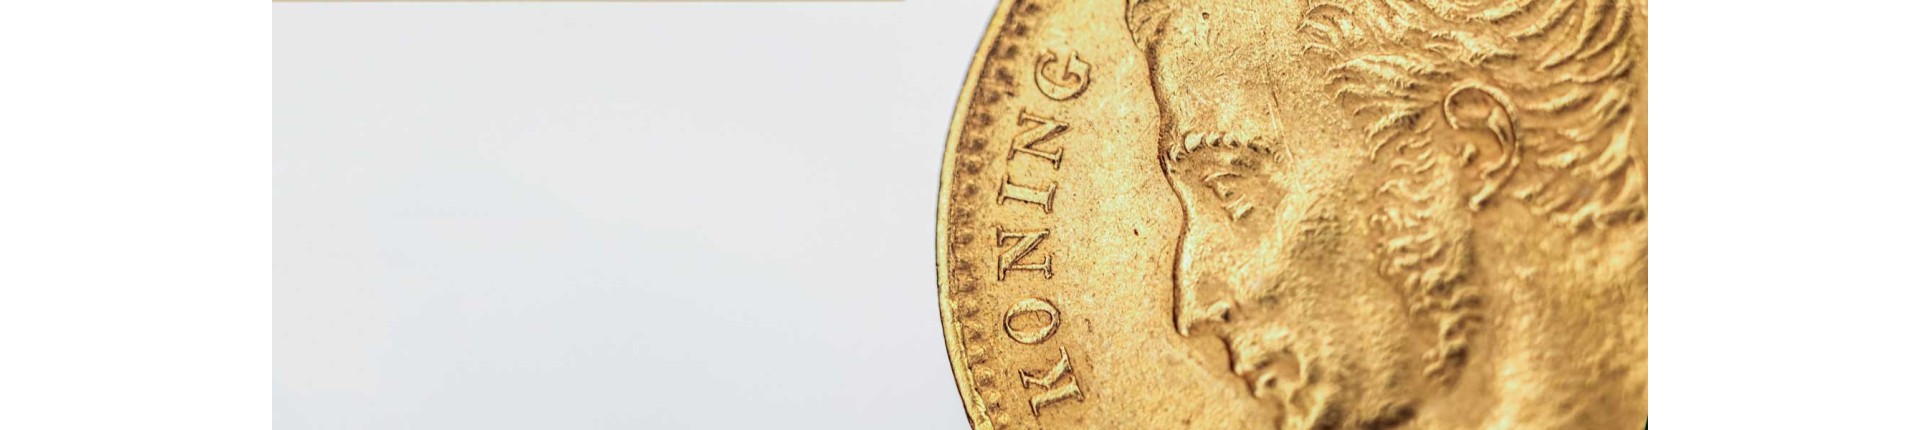 Historische gouden munten